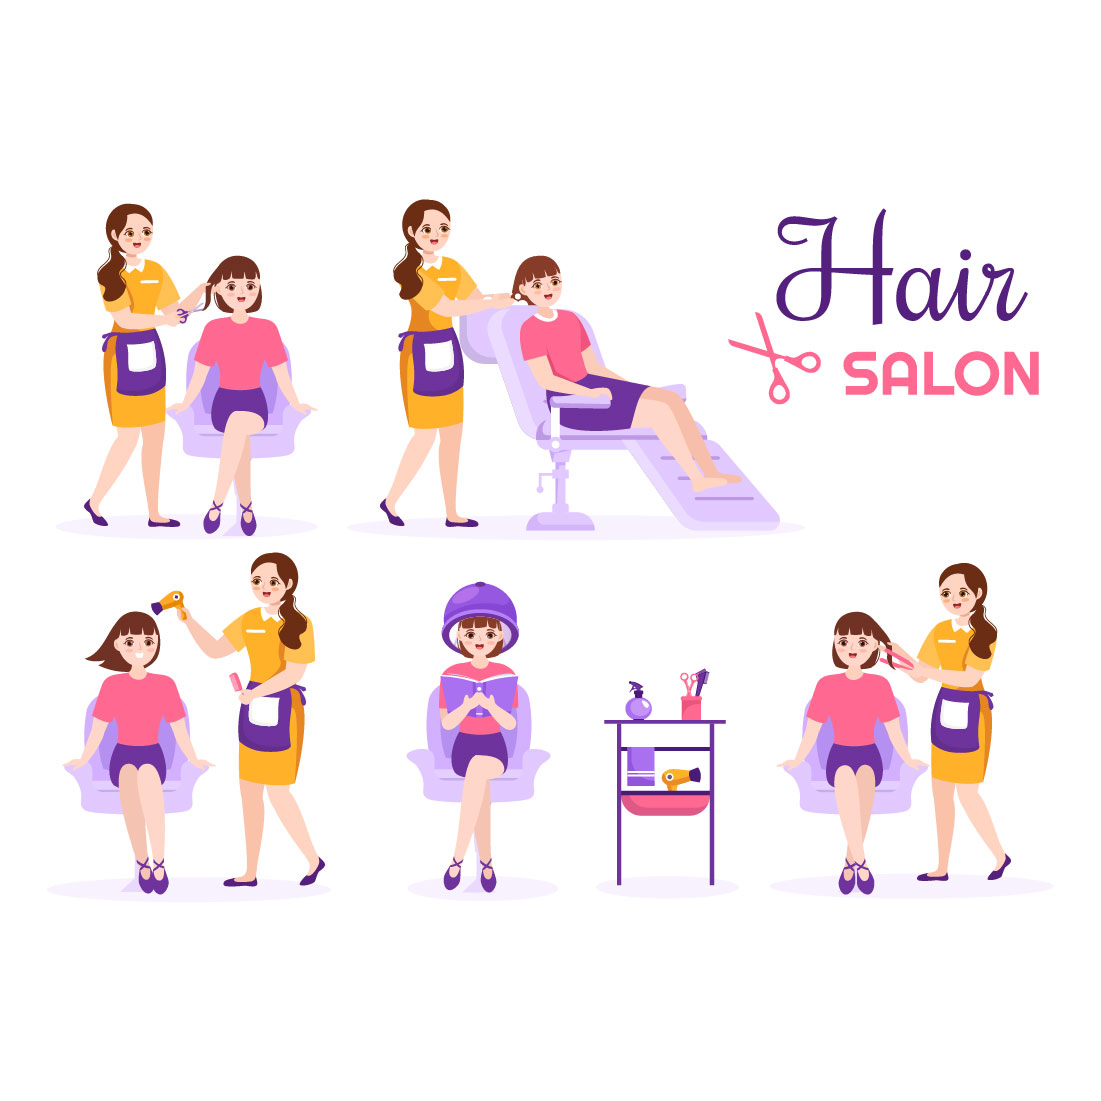 Hair Salon Illustration cover image.